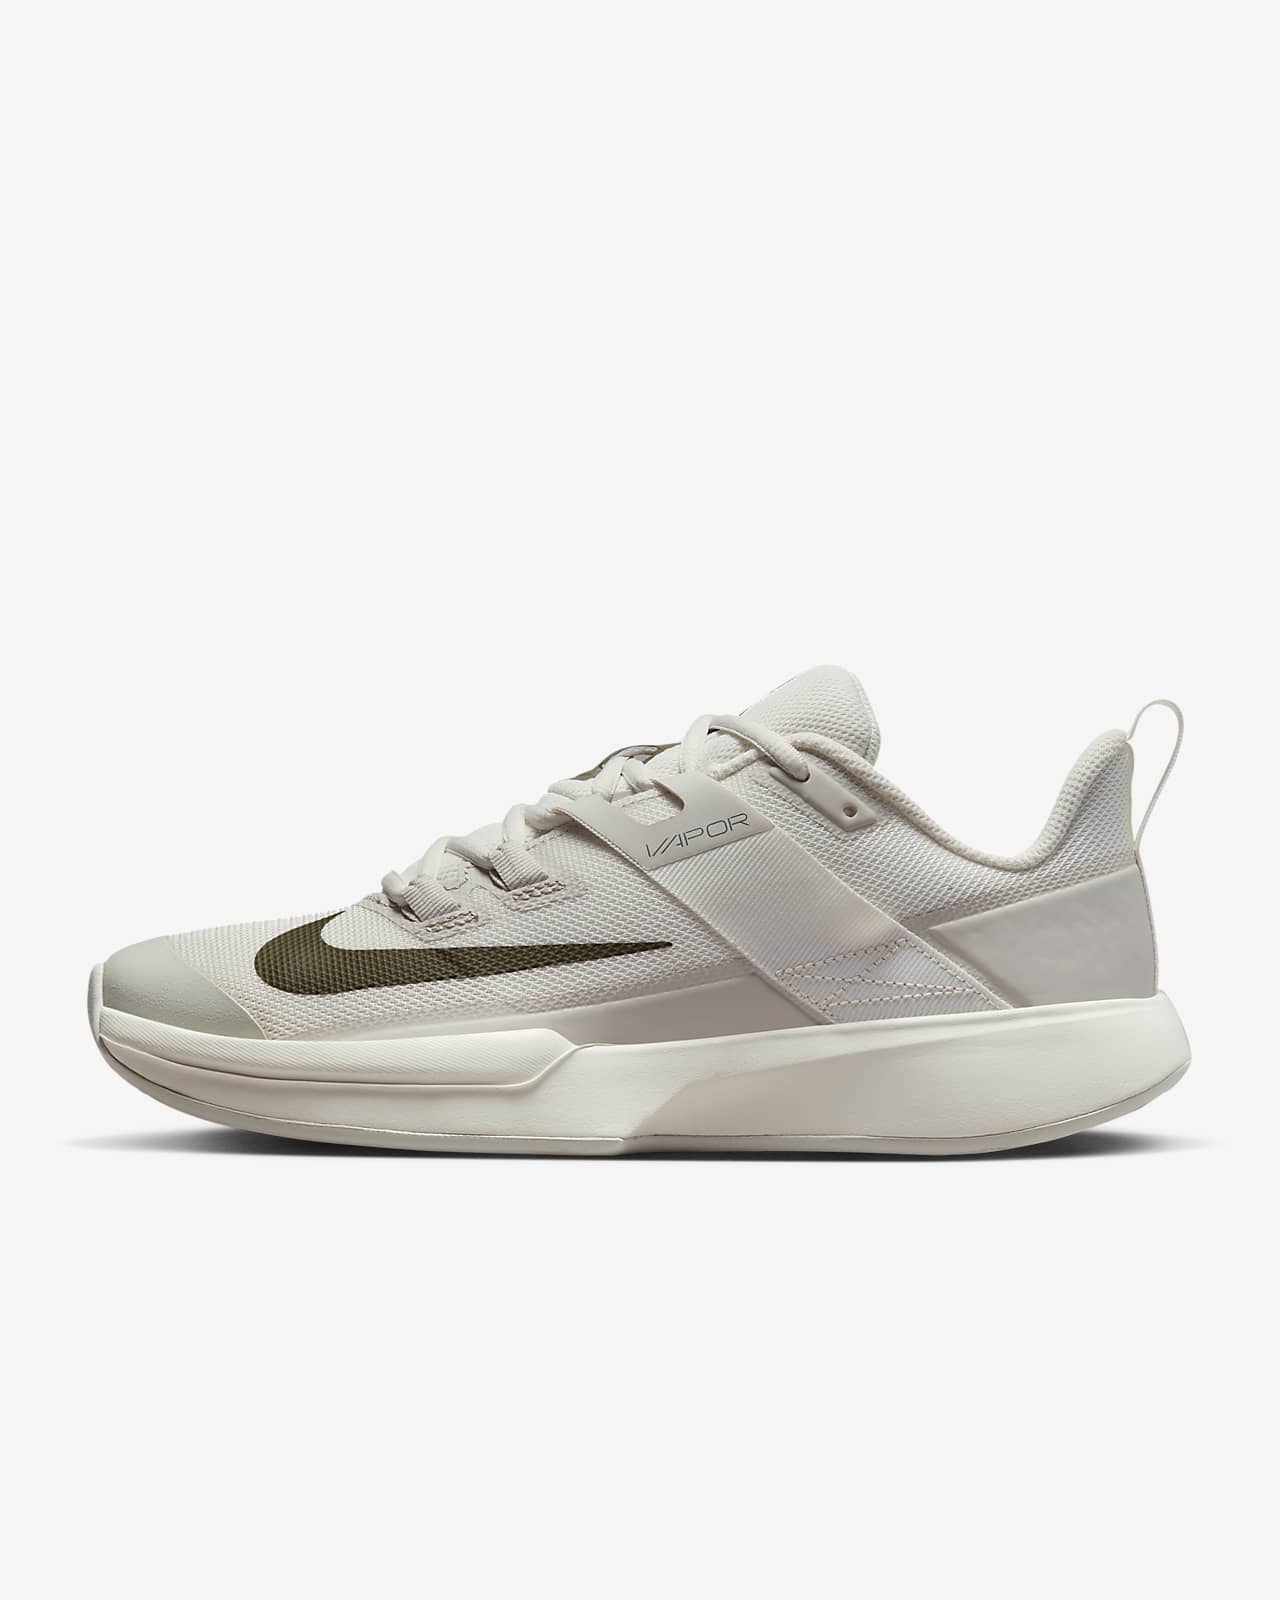 Hard Court Tennis Shoe. Nike 